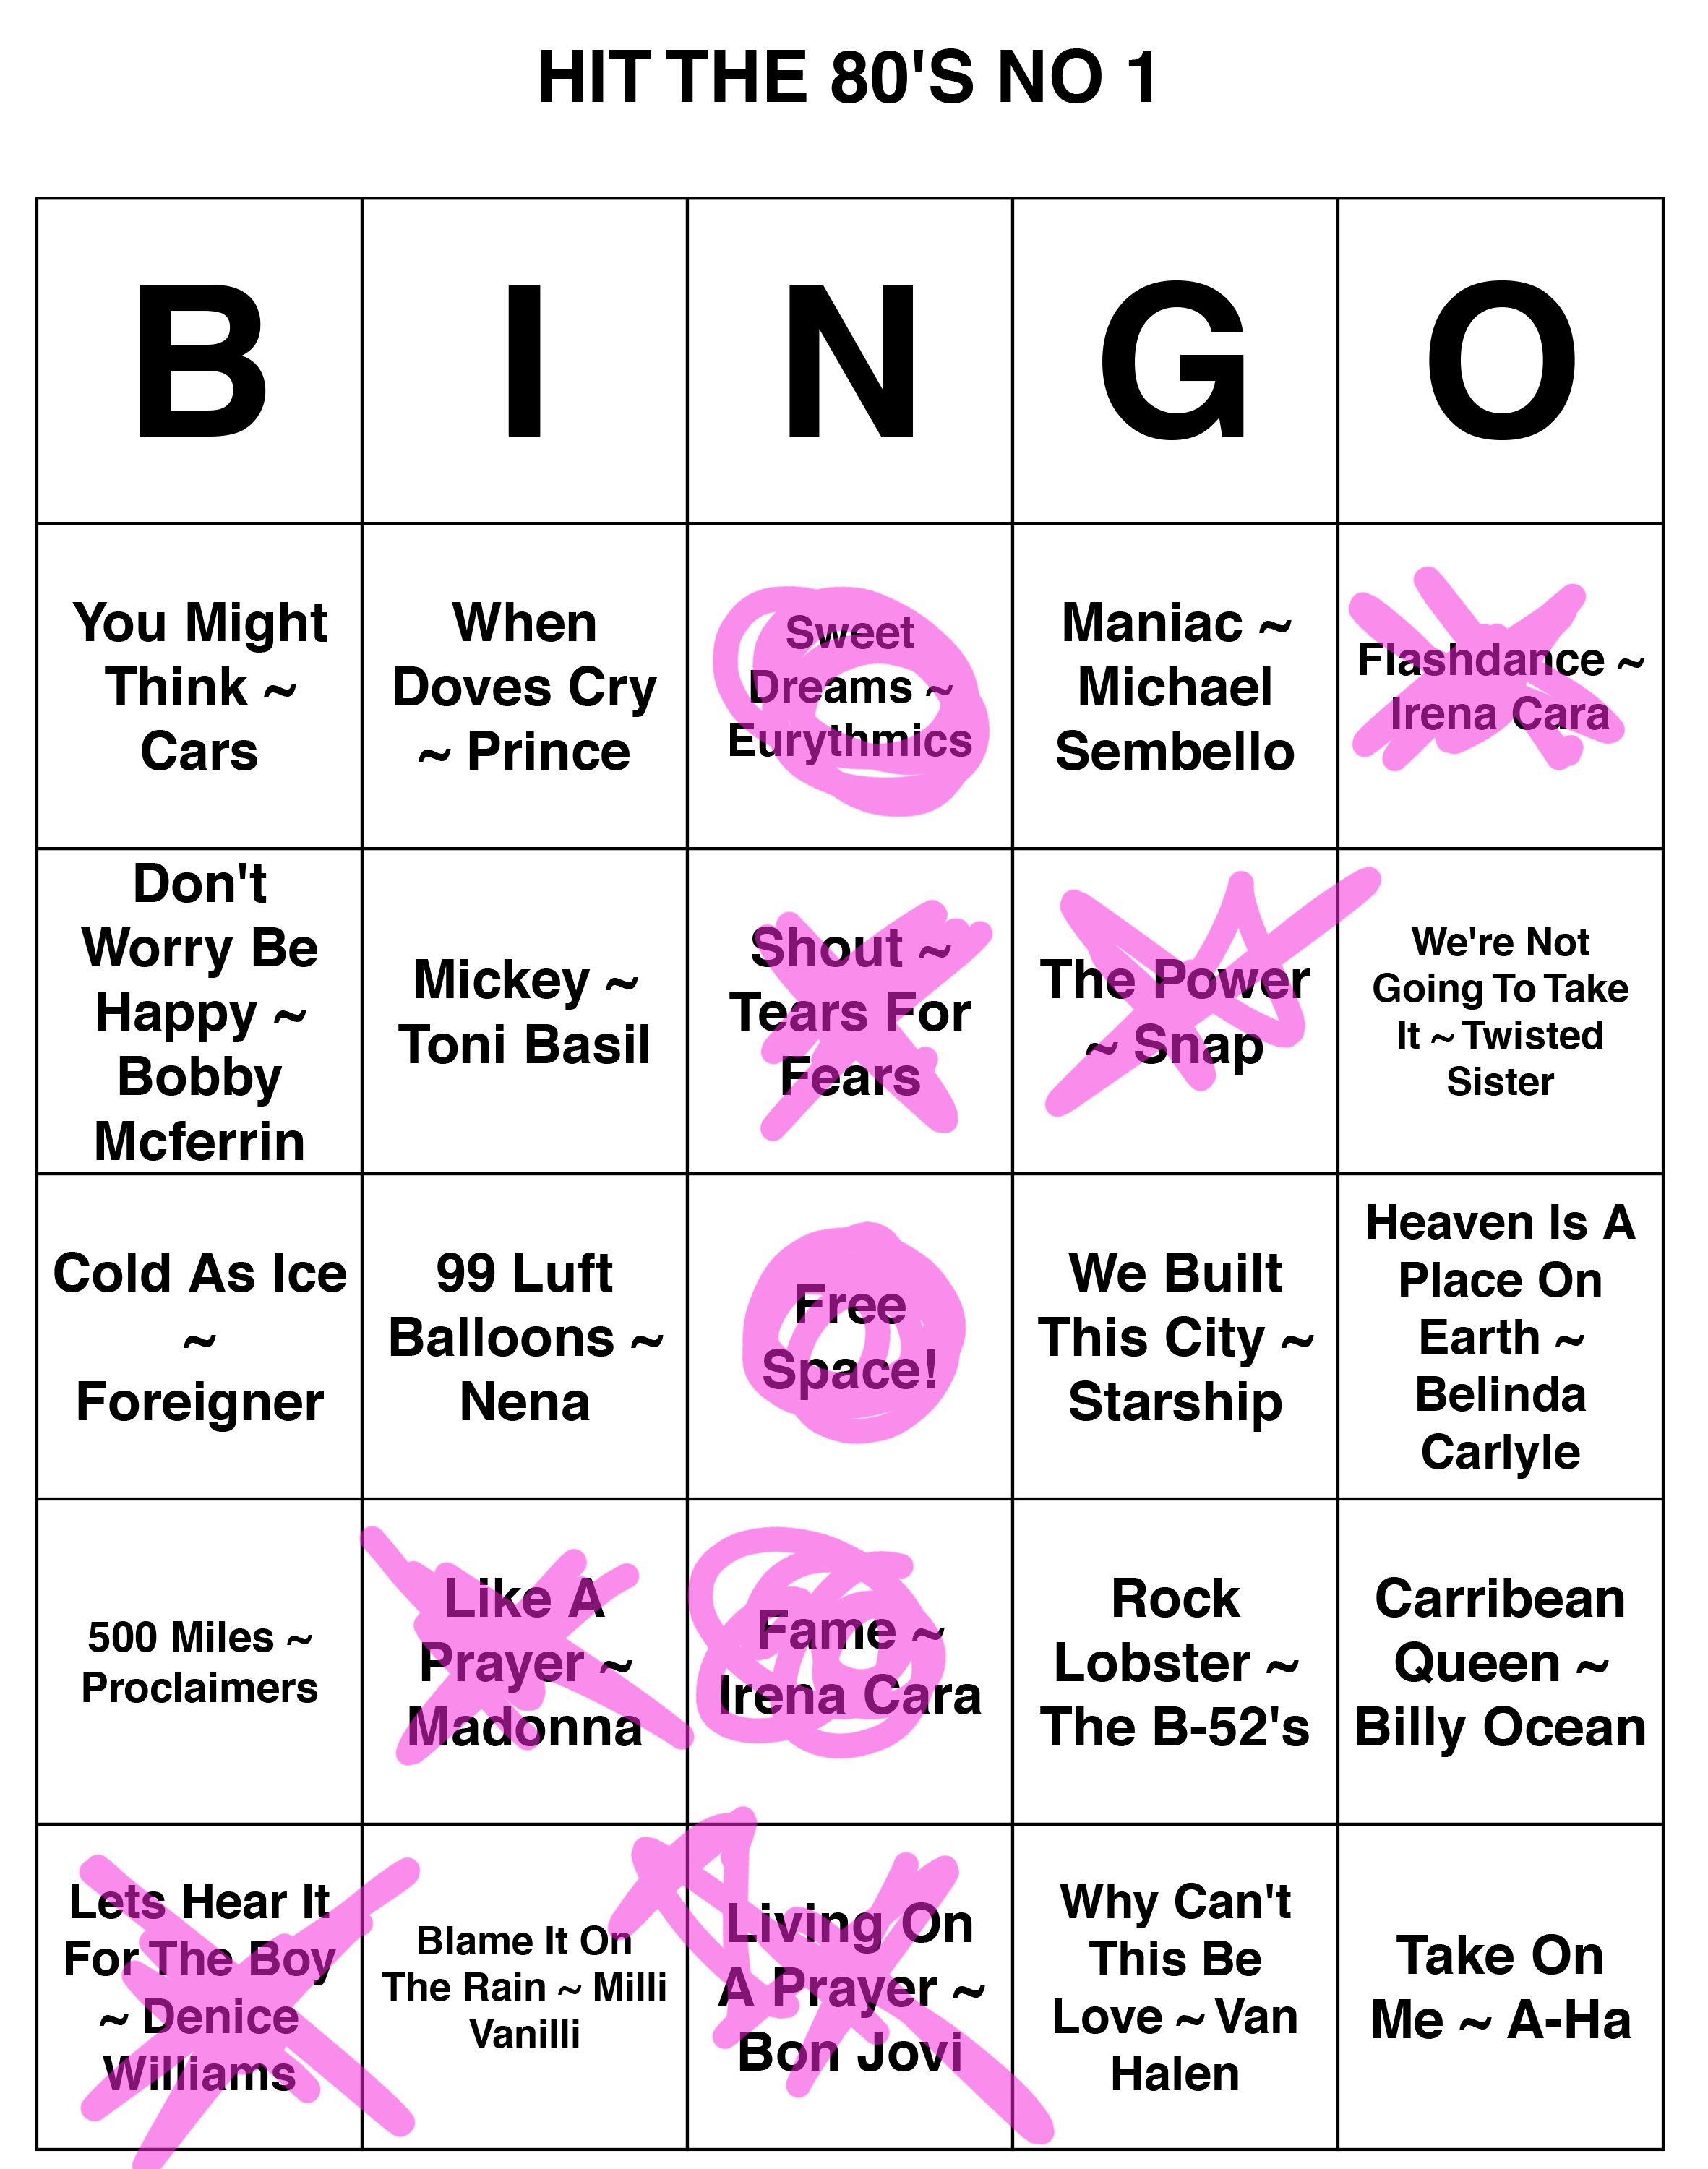 THE NOUGHTIES 1 Bingo Game  READY TO PLAY 50 Bingo Cards  Music CD  Check Sheet 